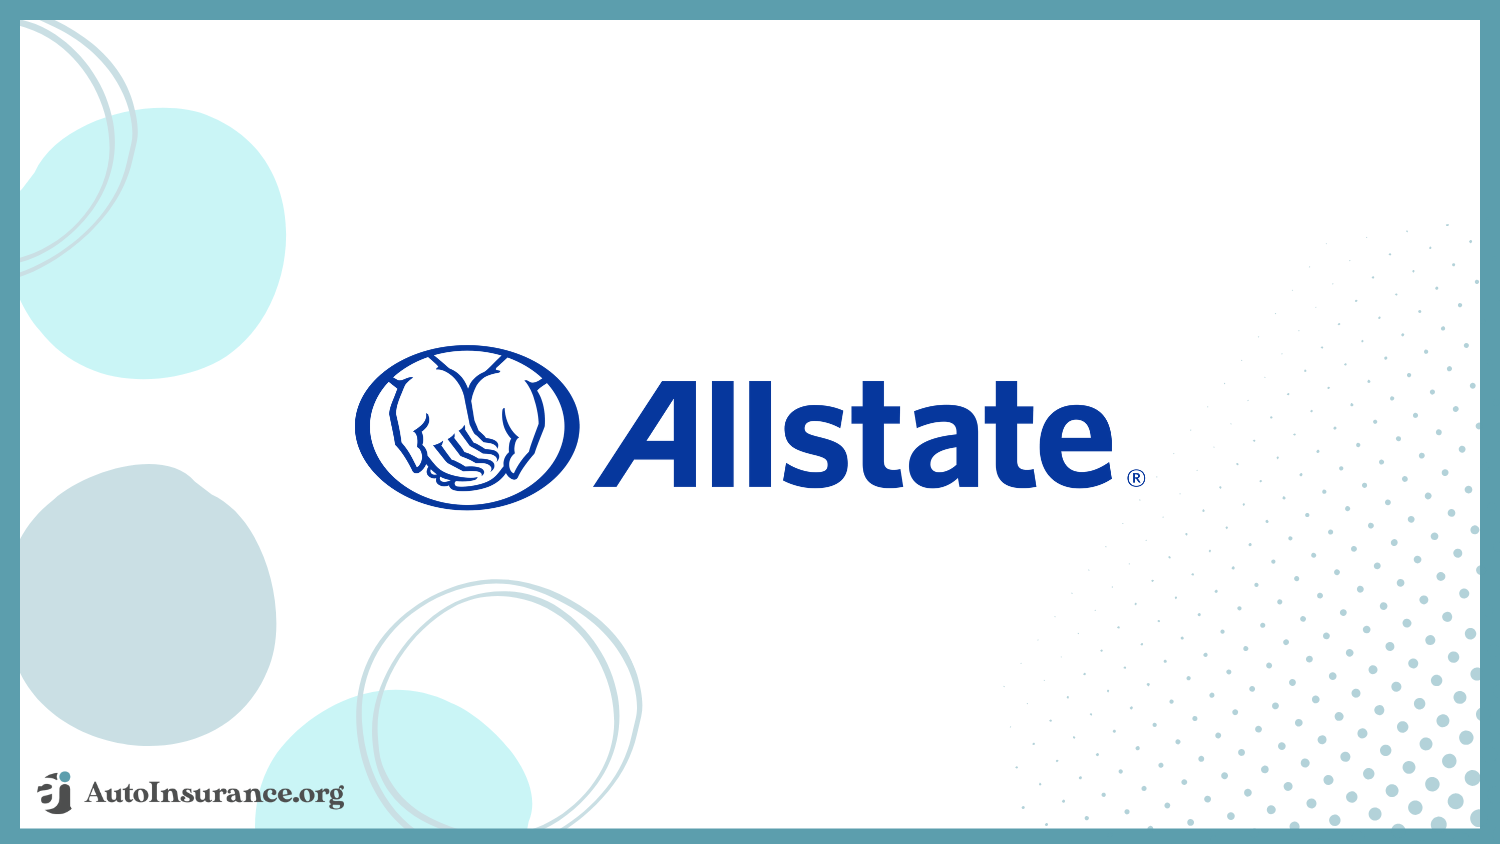 Allstate: Best Parked Car Insurance